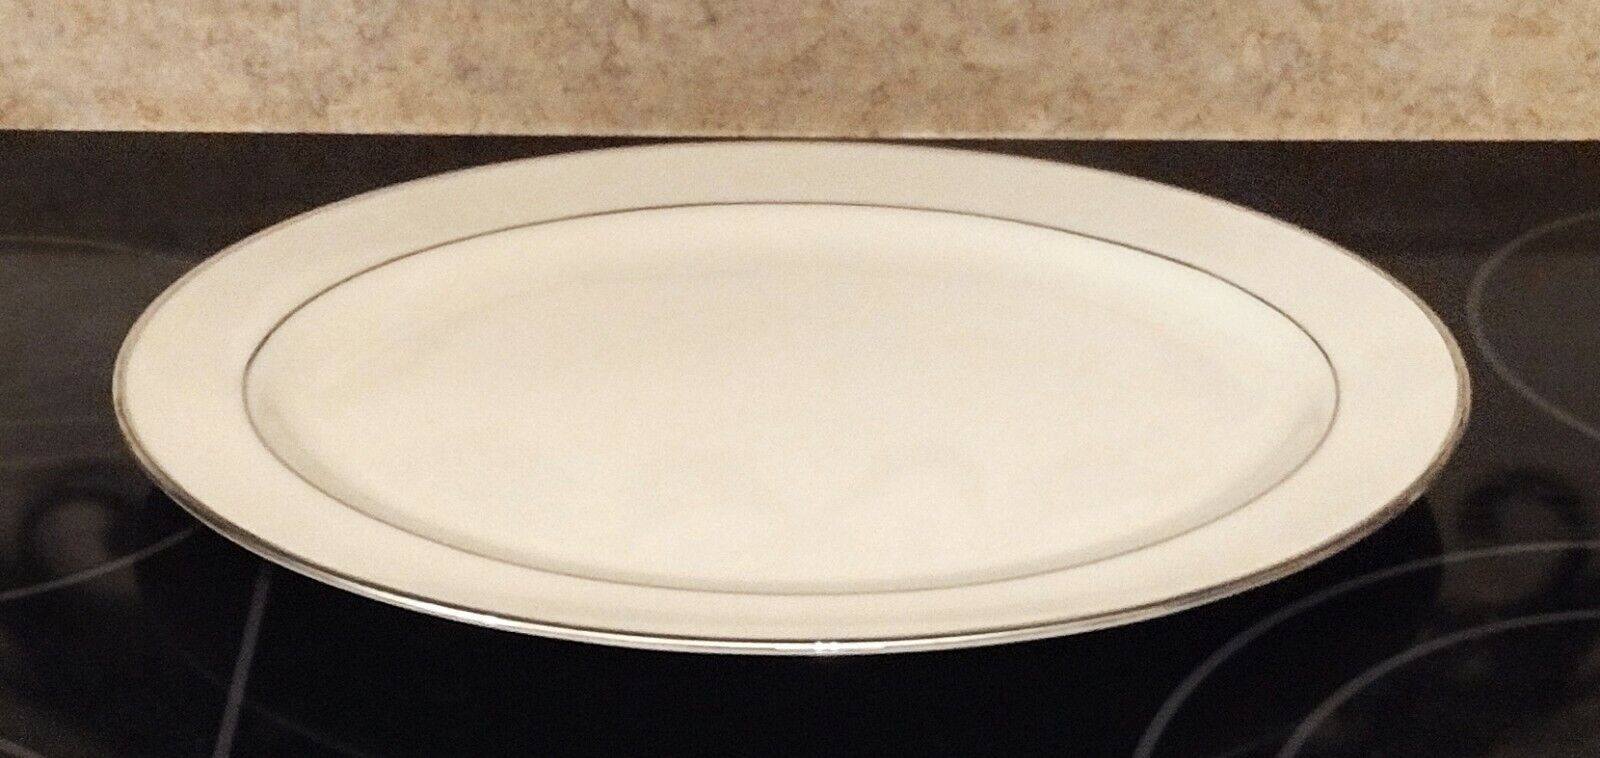 Primary image for Lenox Montclair Presidential Collection Cream Platinum Rim 13.5x10 Oval Platter